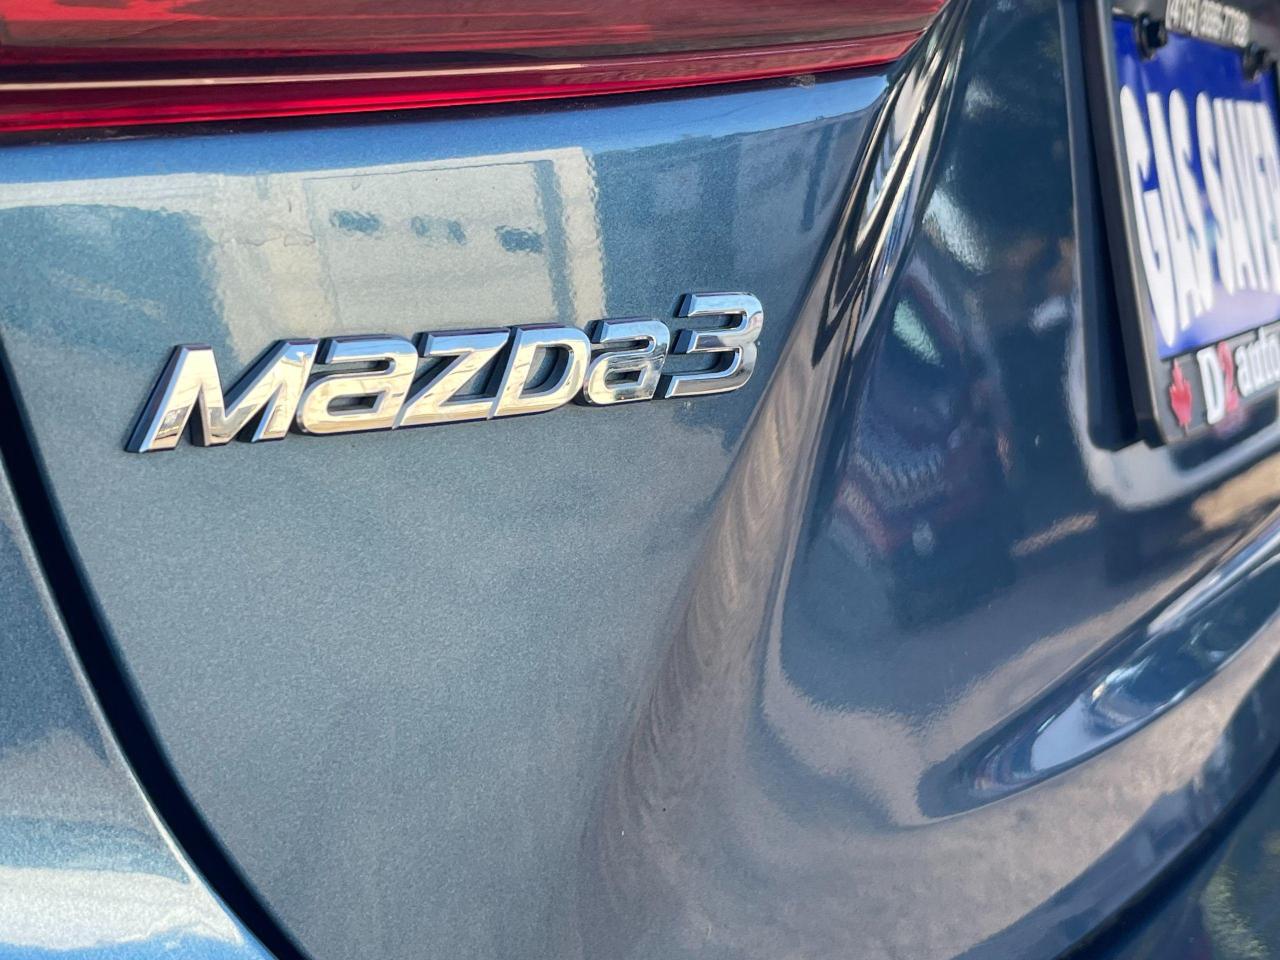 2017 Mazda MAZDA3 TOURING/BT/Backup camera/certified pre owned. - Photo #13